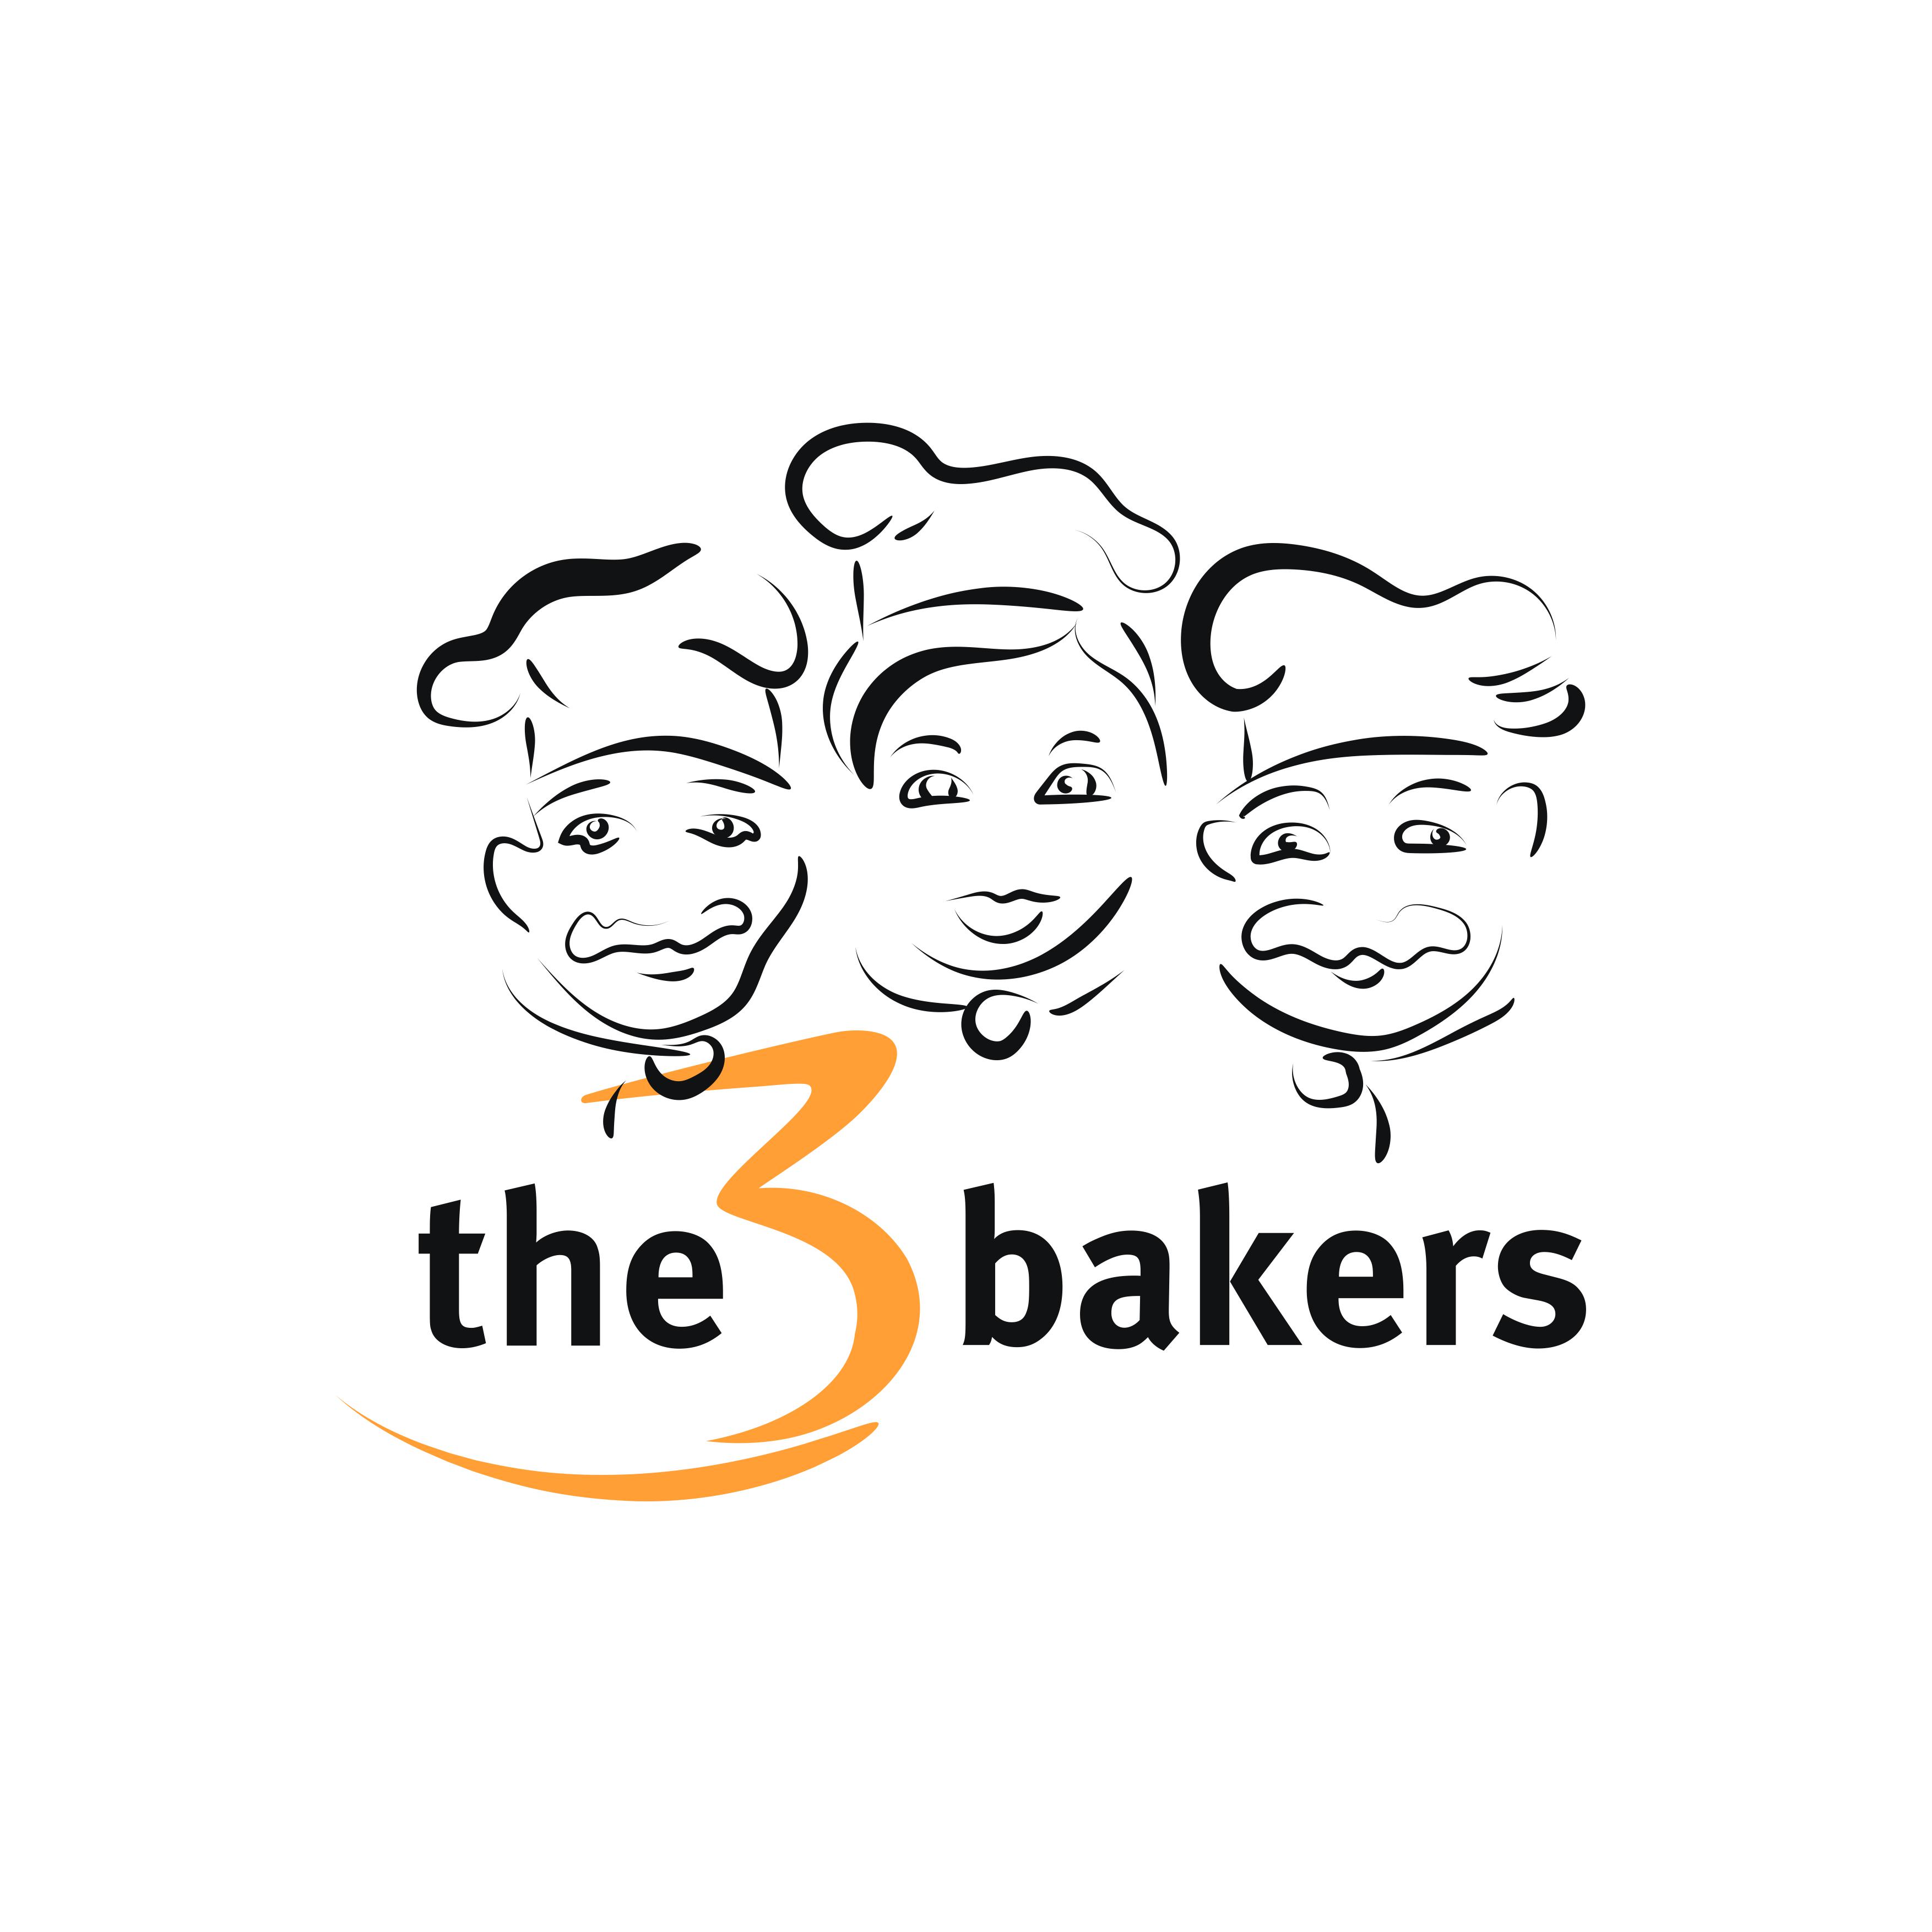 The Three Bakers Ltd